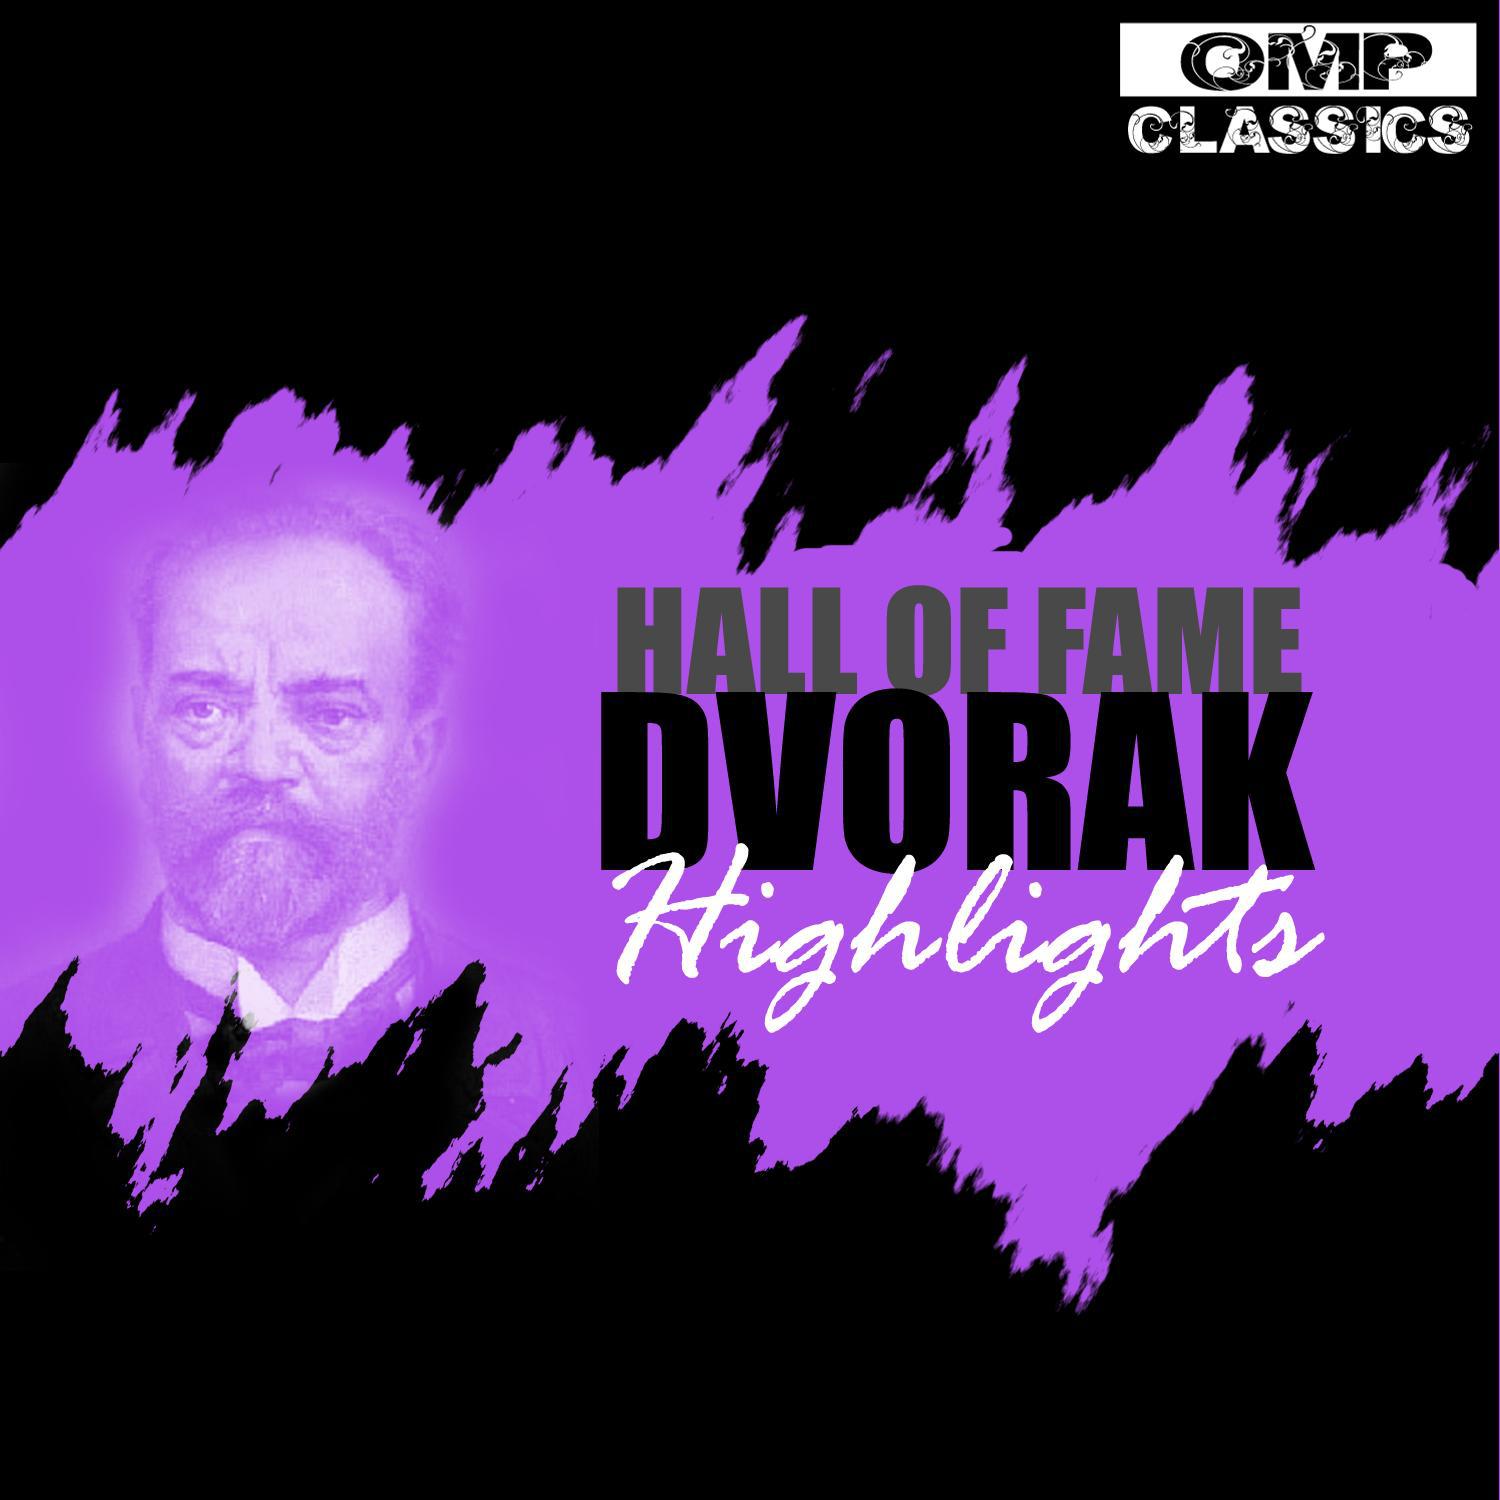 Hall of Fame: Dvora k Highlights